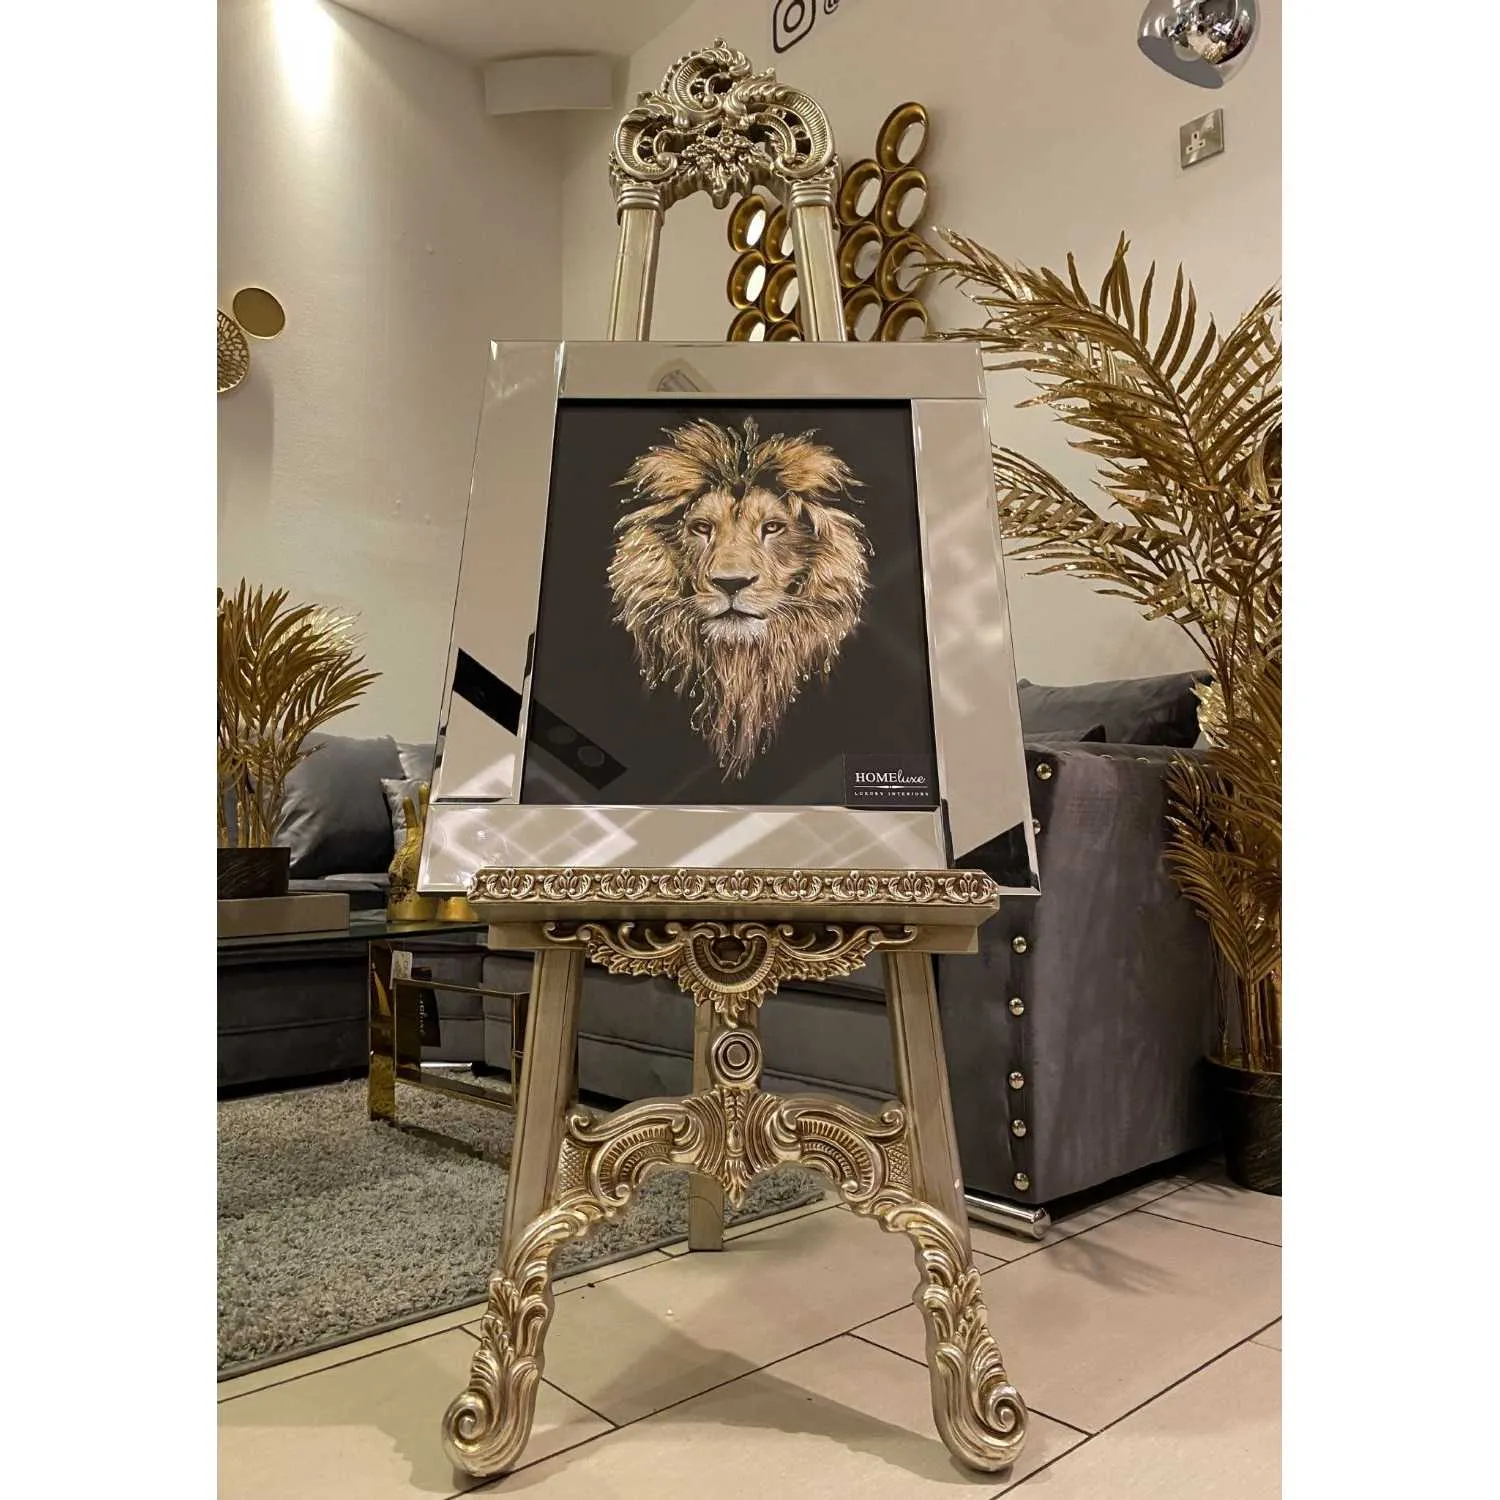 Lionhead Gold On Black Wall Art Mirror Frame